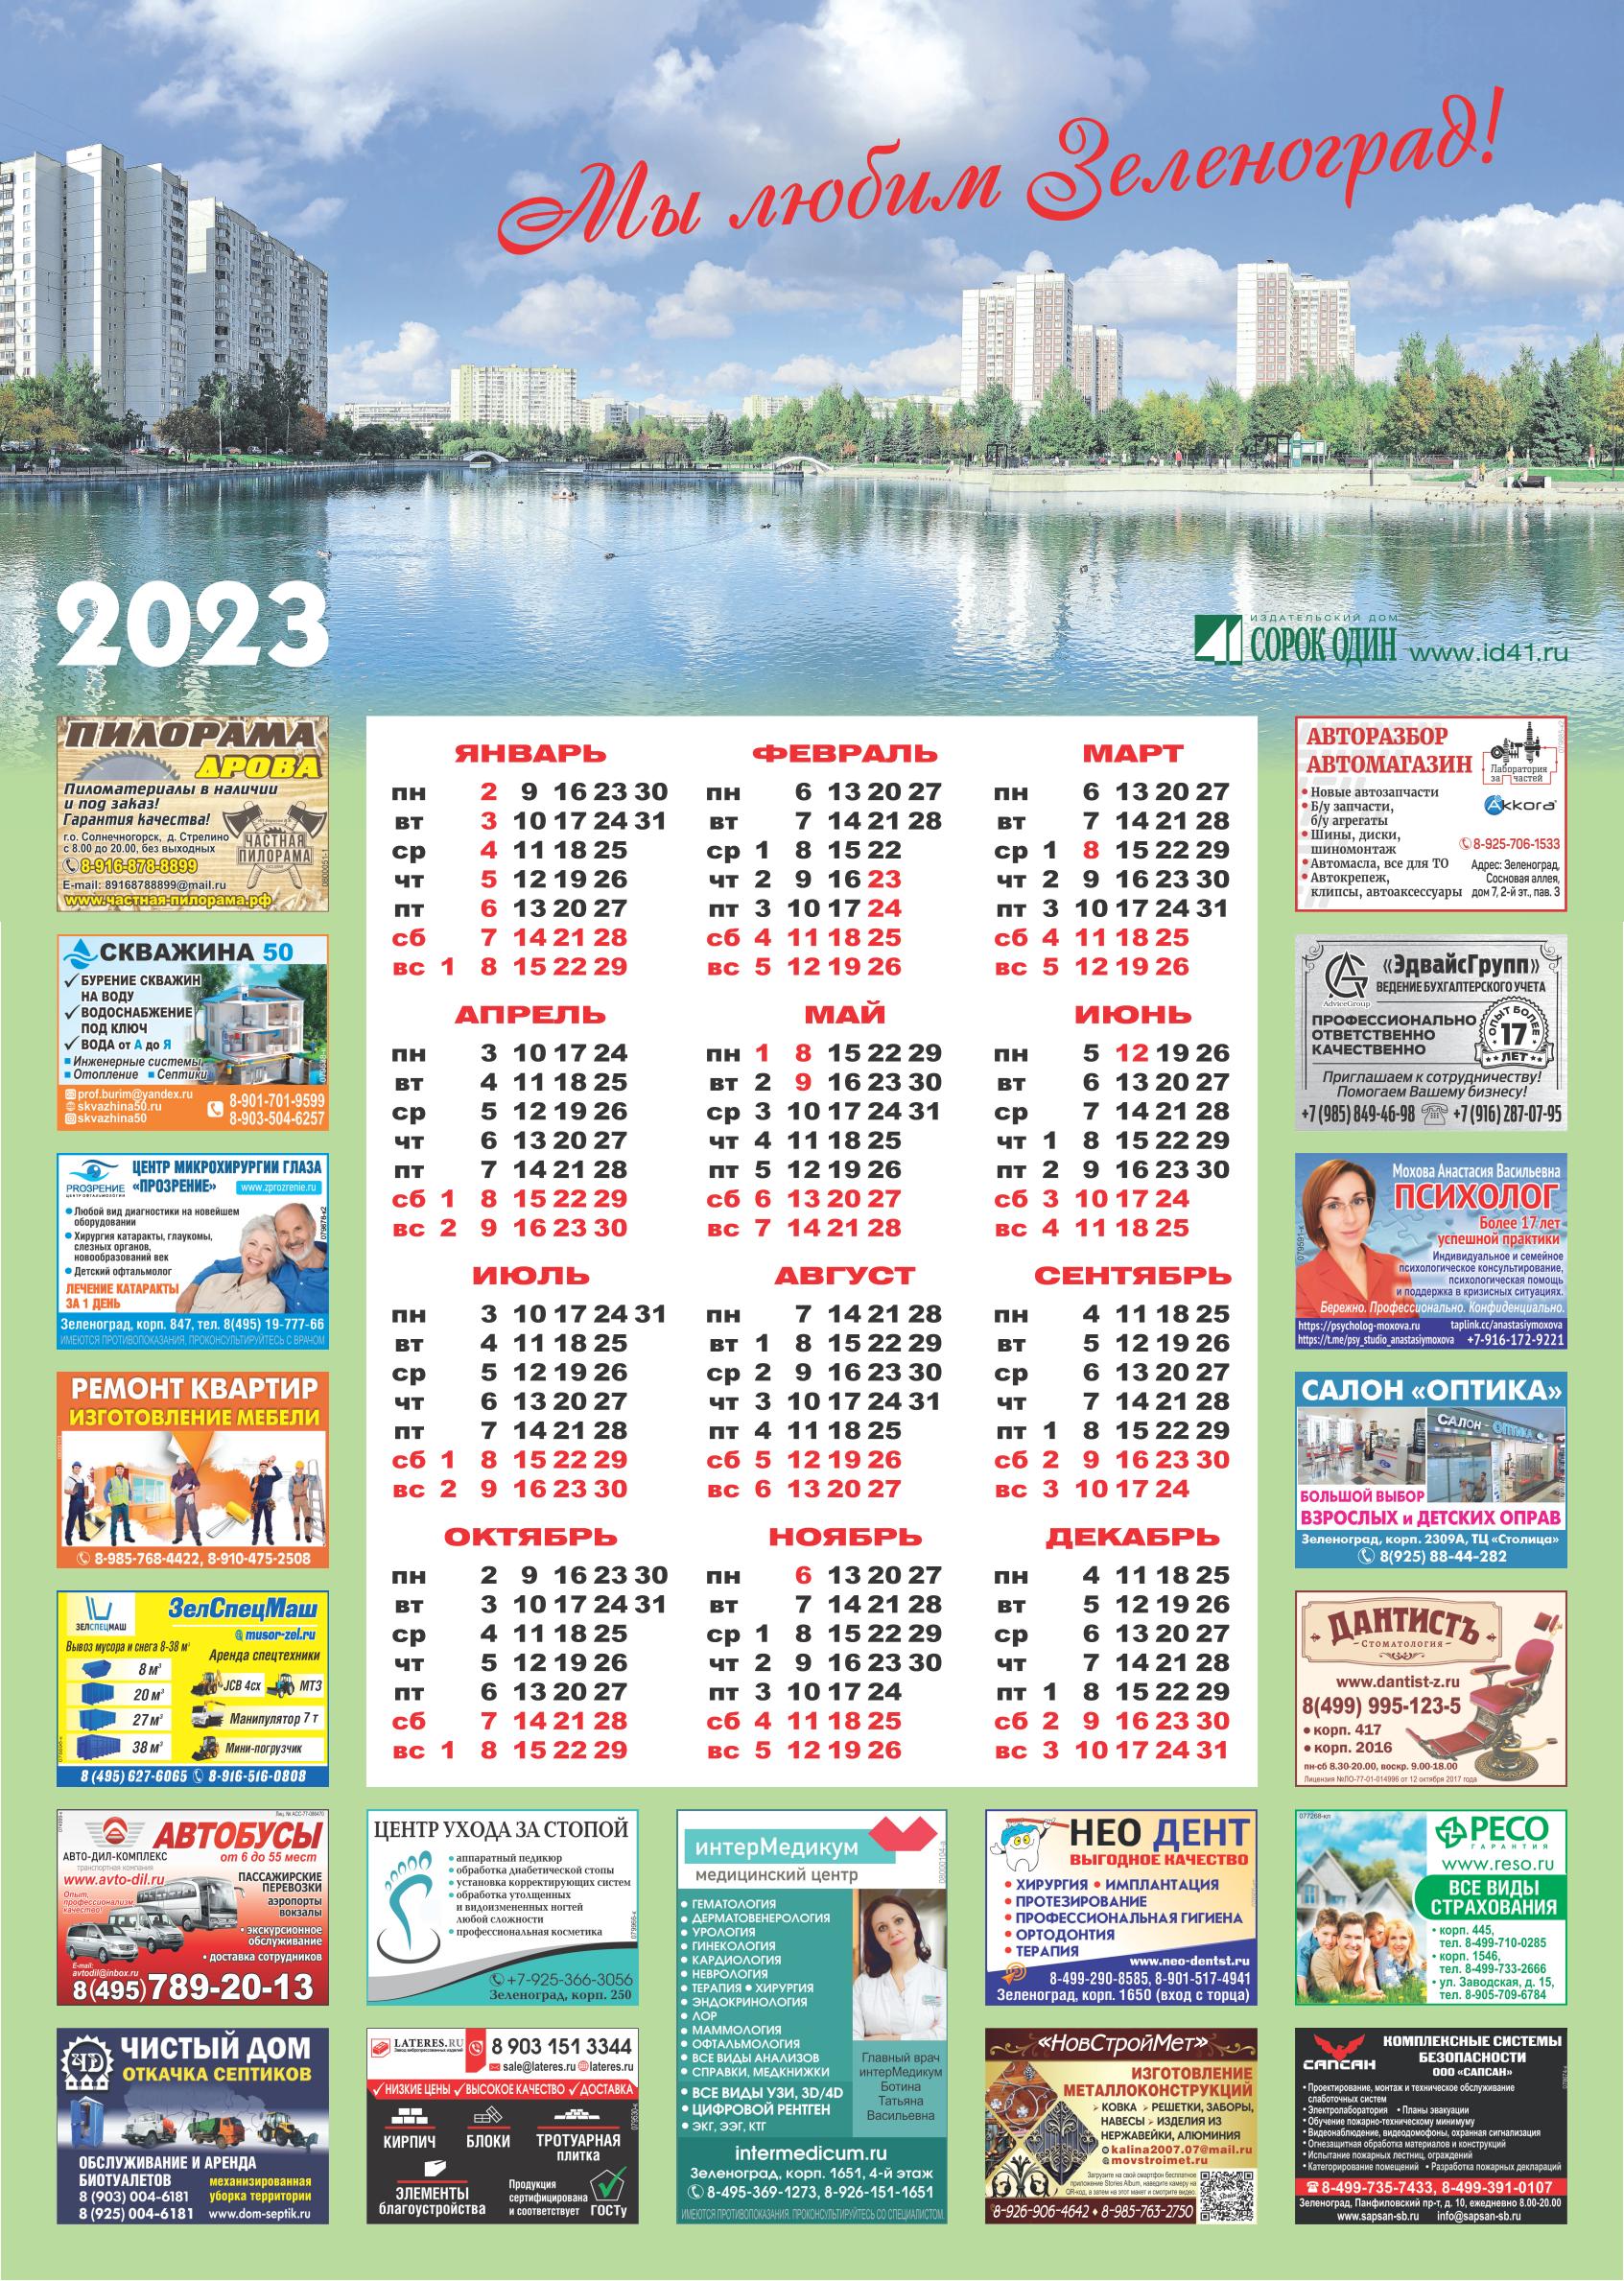 Календарь «Мы любим Зеленоград!» А2 2023